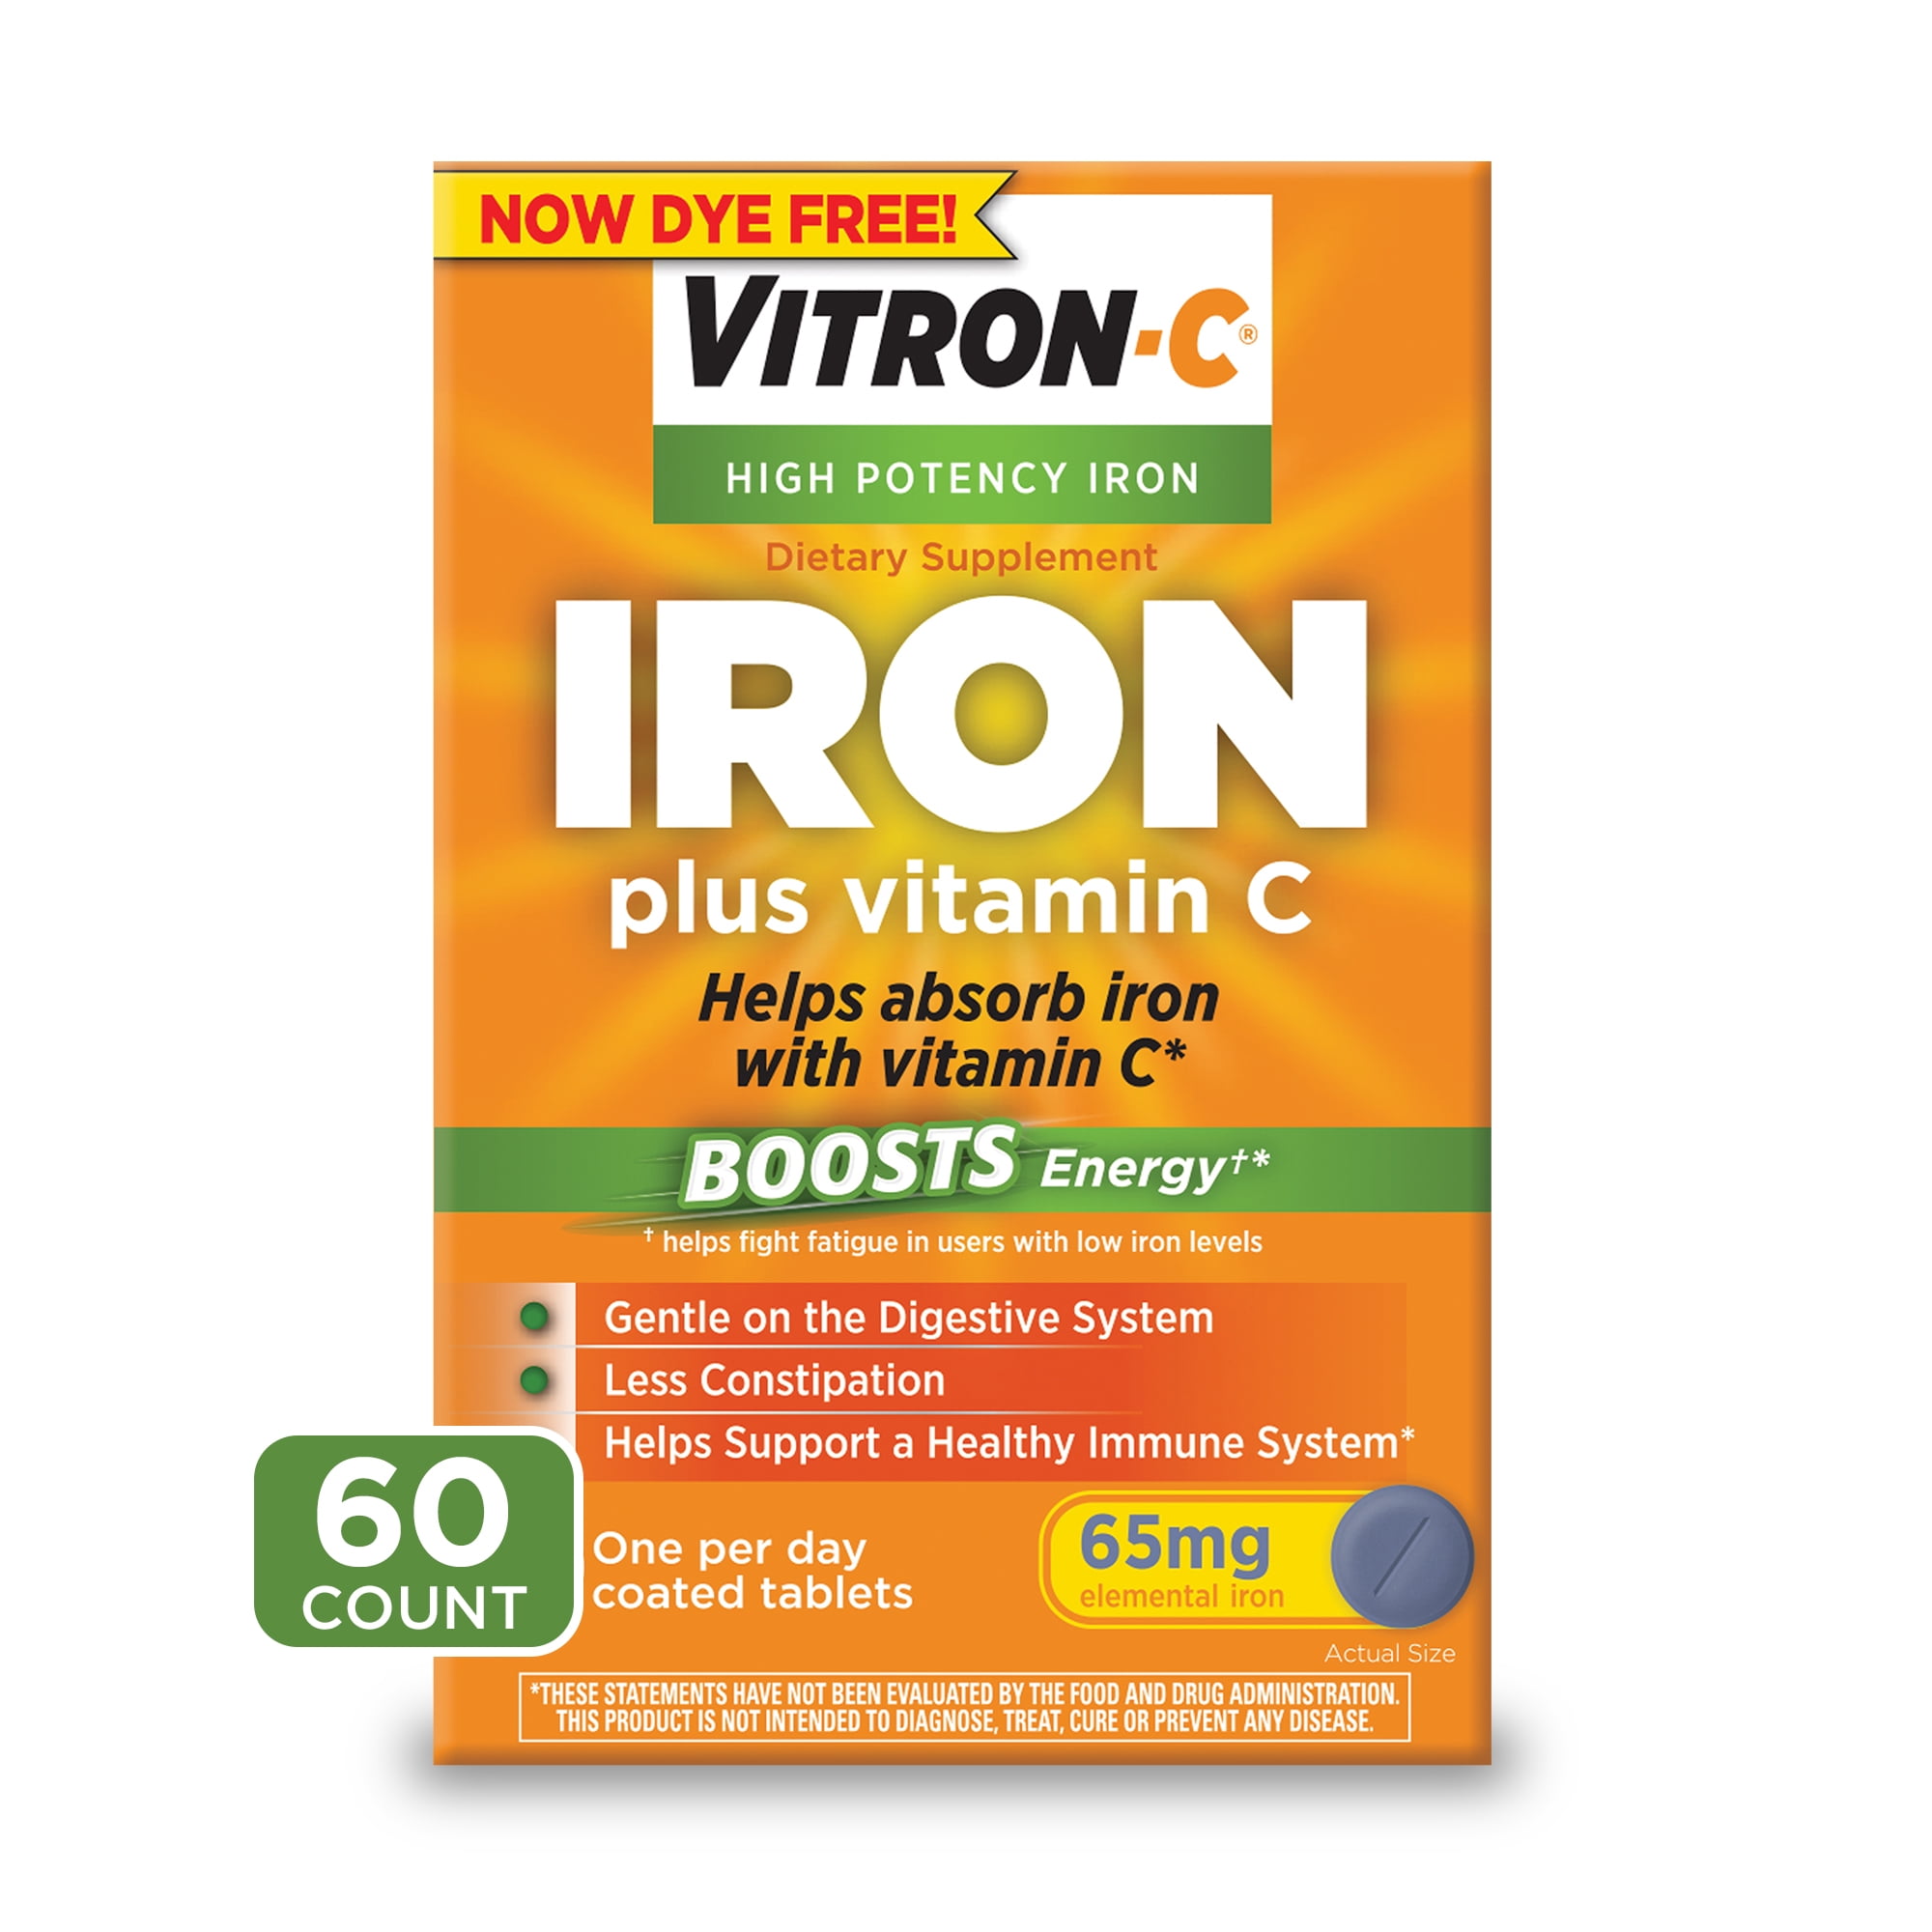 Compre online produtos de Iron Health